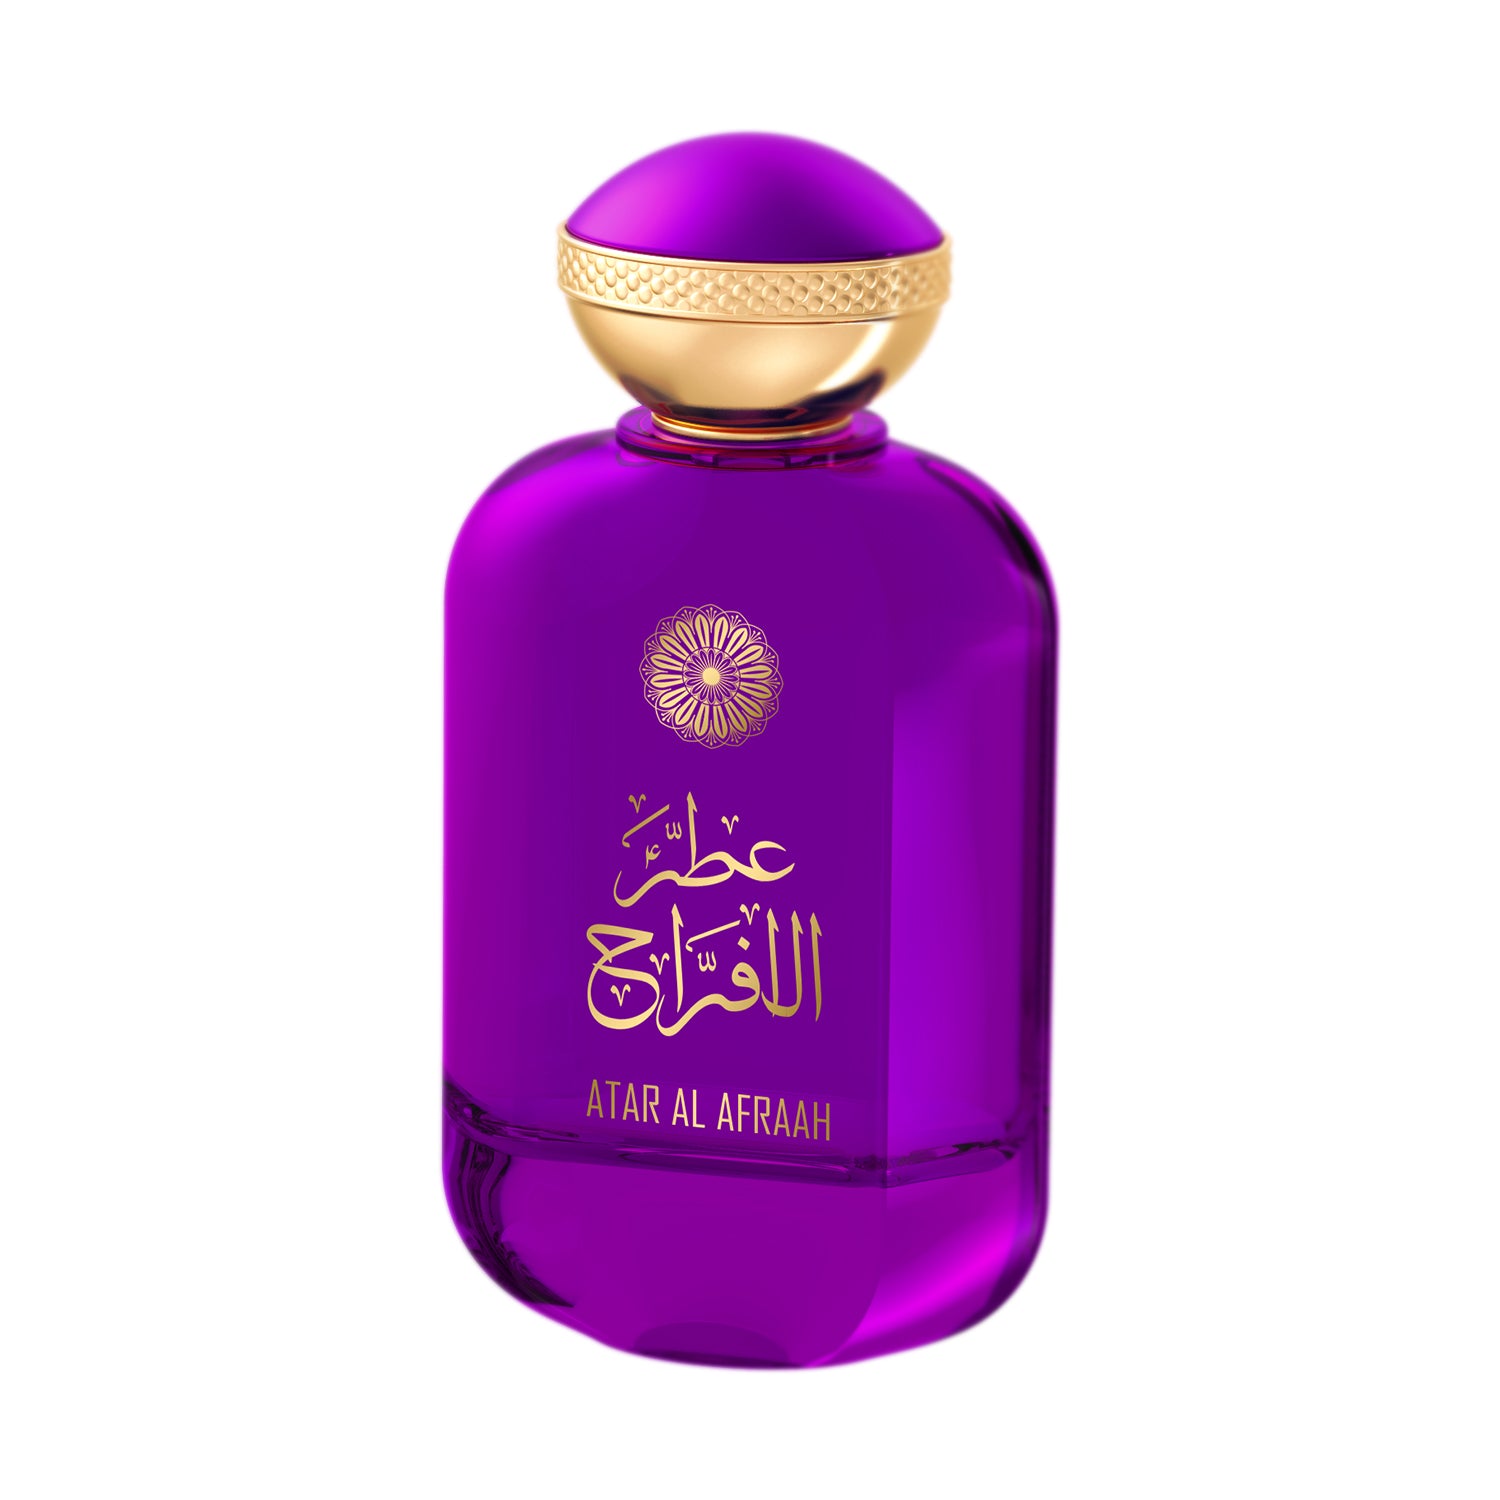 Atar Al Afraah - Orientals Edition for Unisex